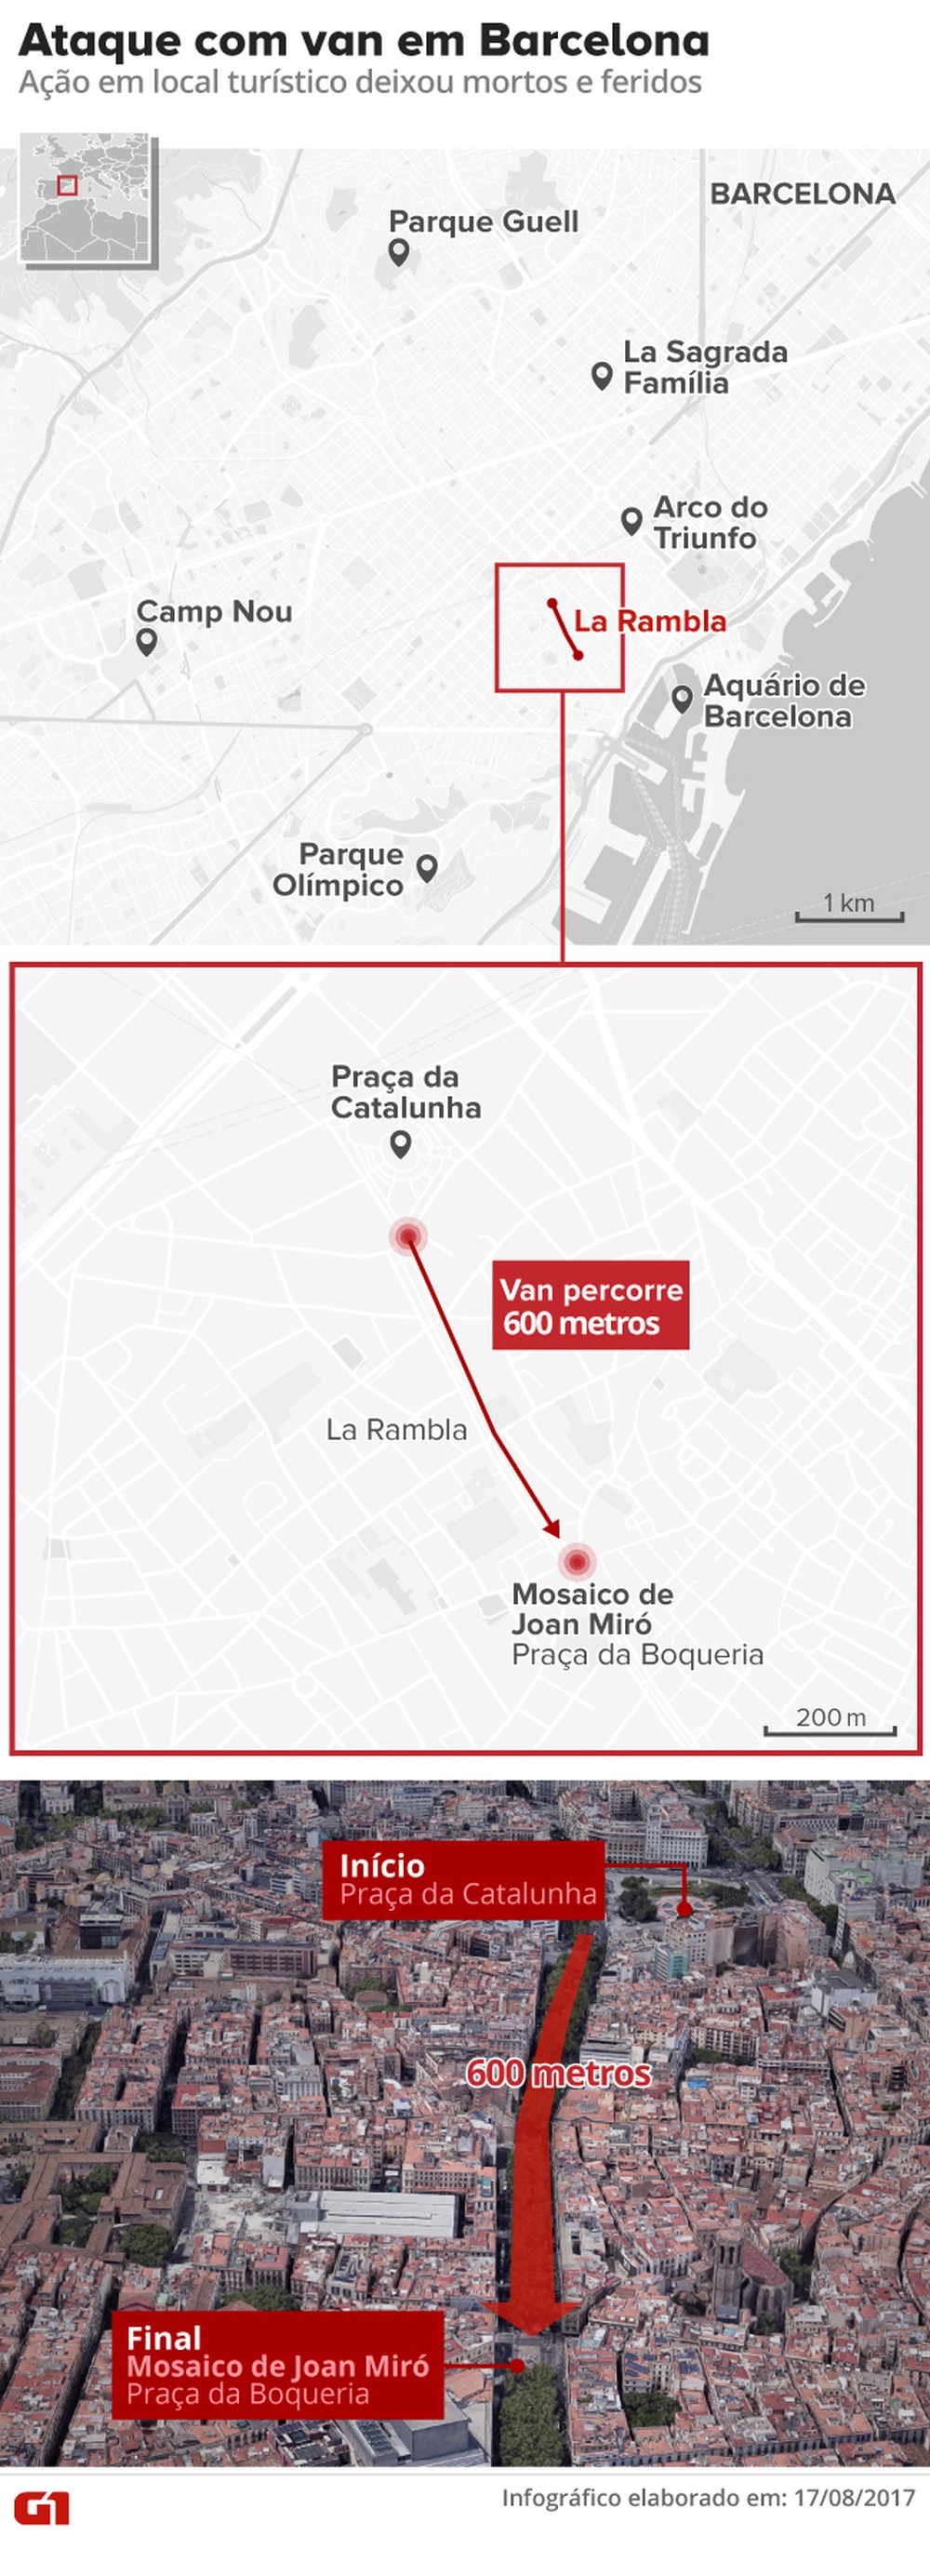 ataque-barcelona-mapa-2.jpg